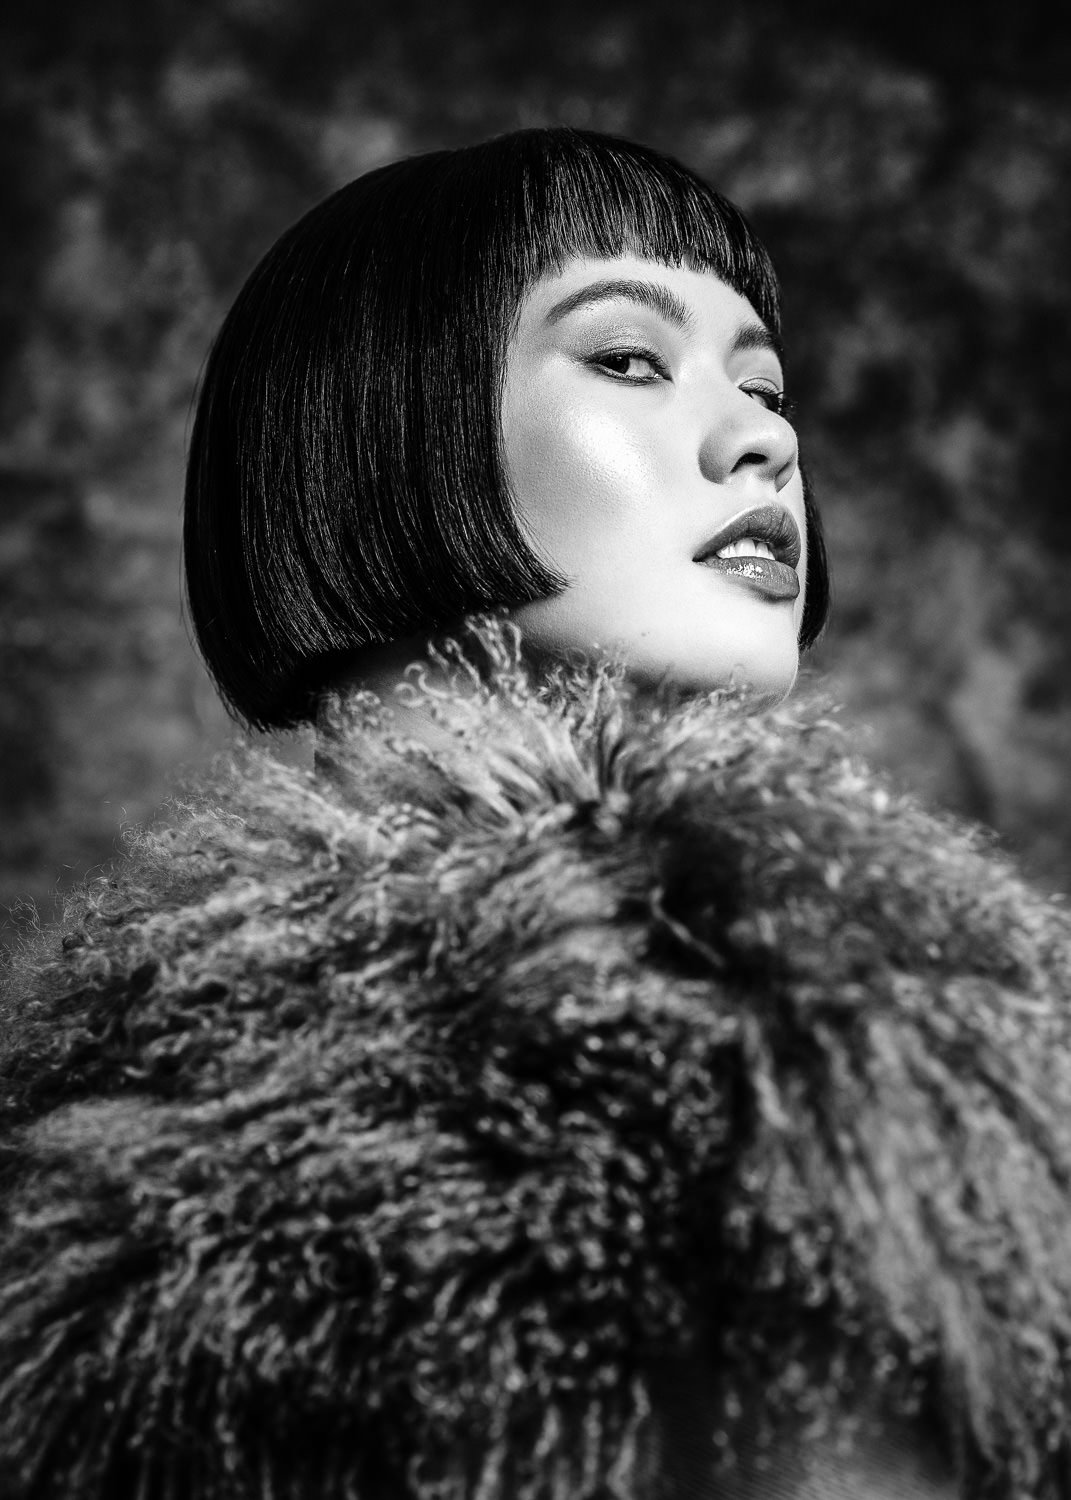 black-and-white-fashion-studio-portrait-for-toni-and-guy-by-kris-kesiak.jpg